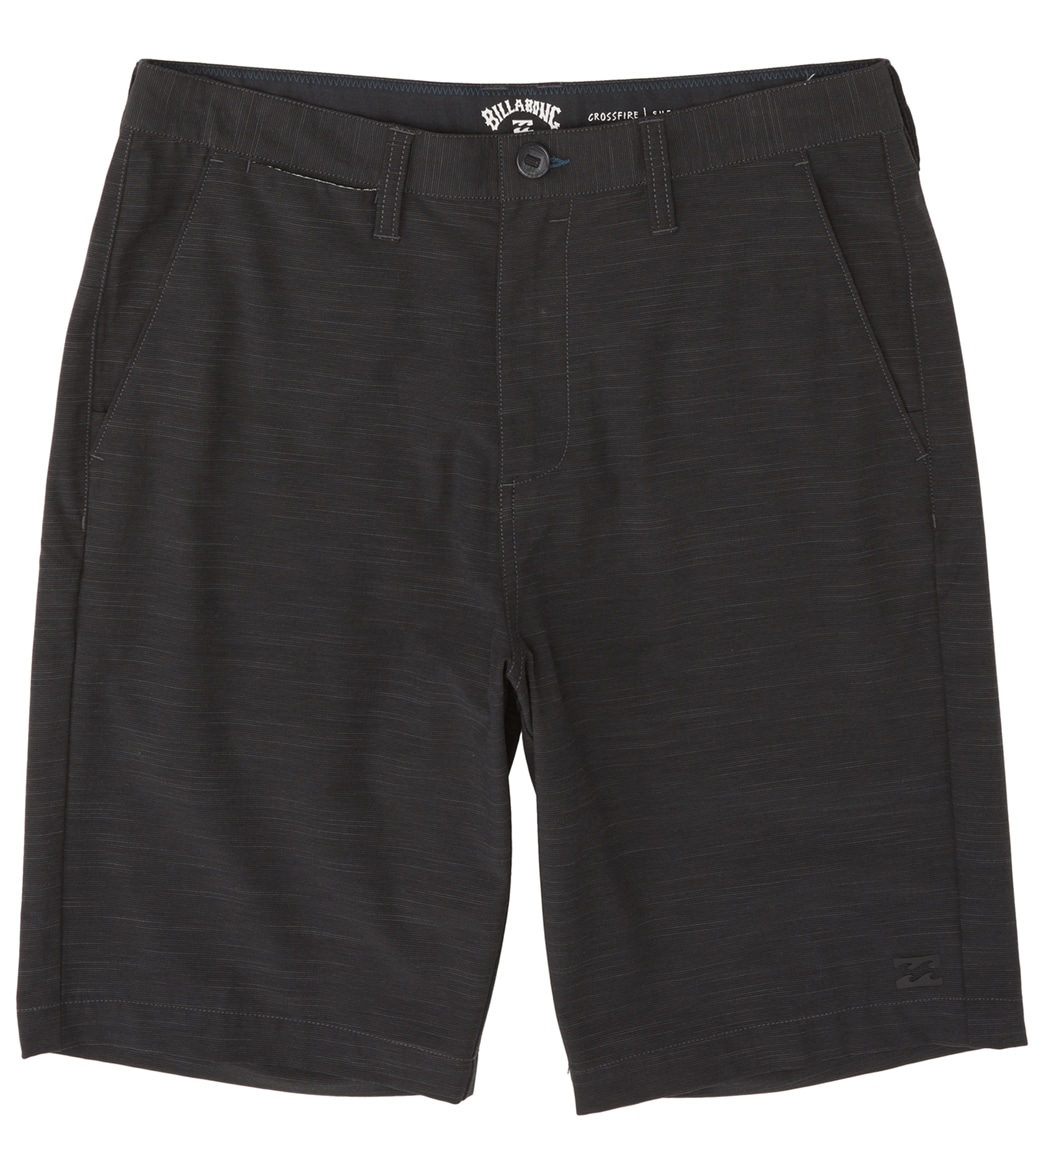 Billabong Men's Crossfire Slub Mid Hybrid Walkshorts - Black 31 Cotton/Polyester - Swimoutlet.com